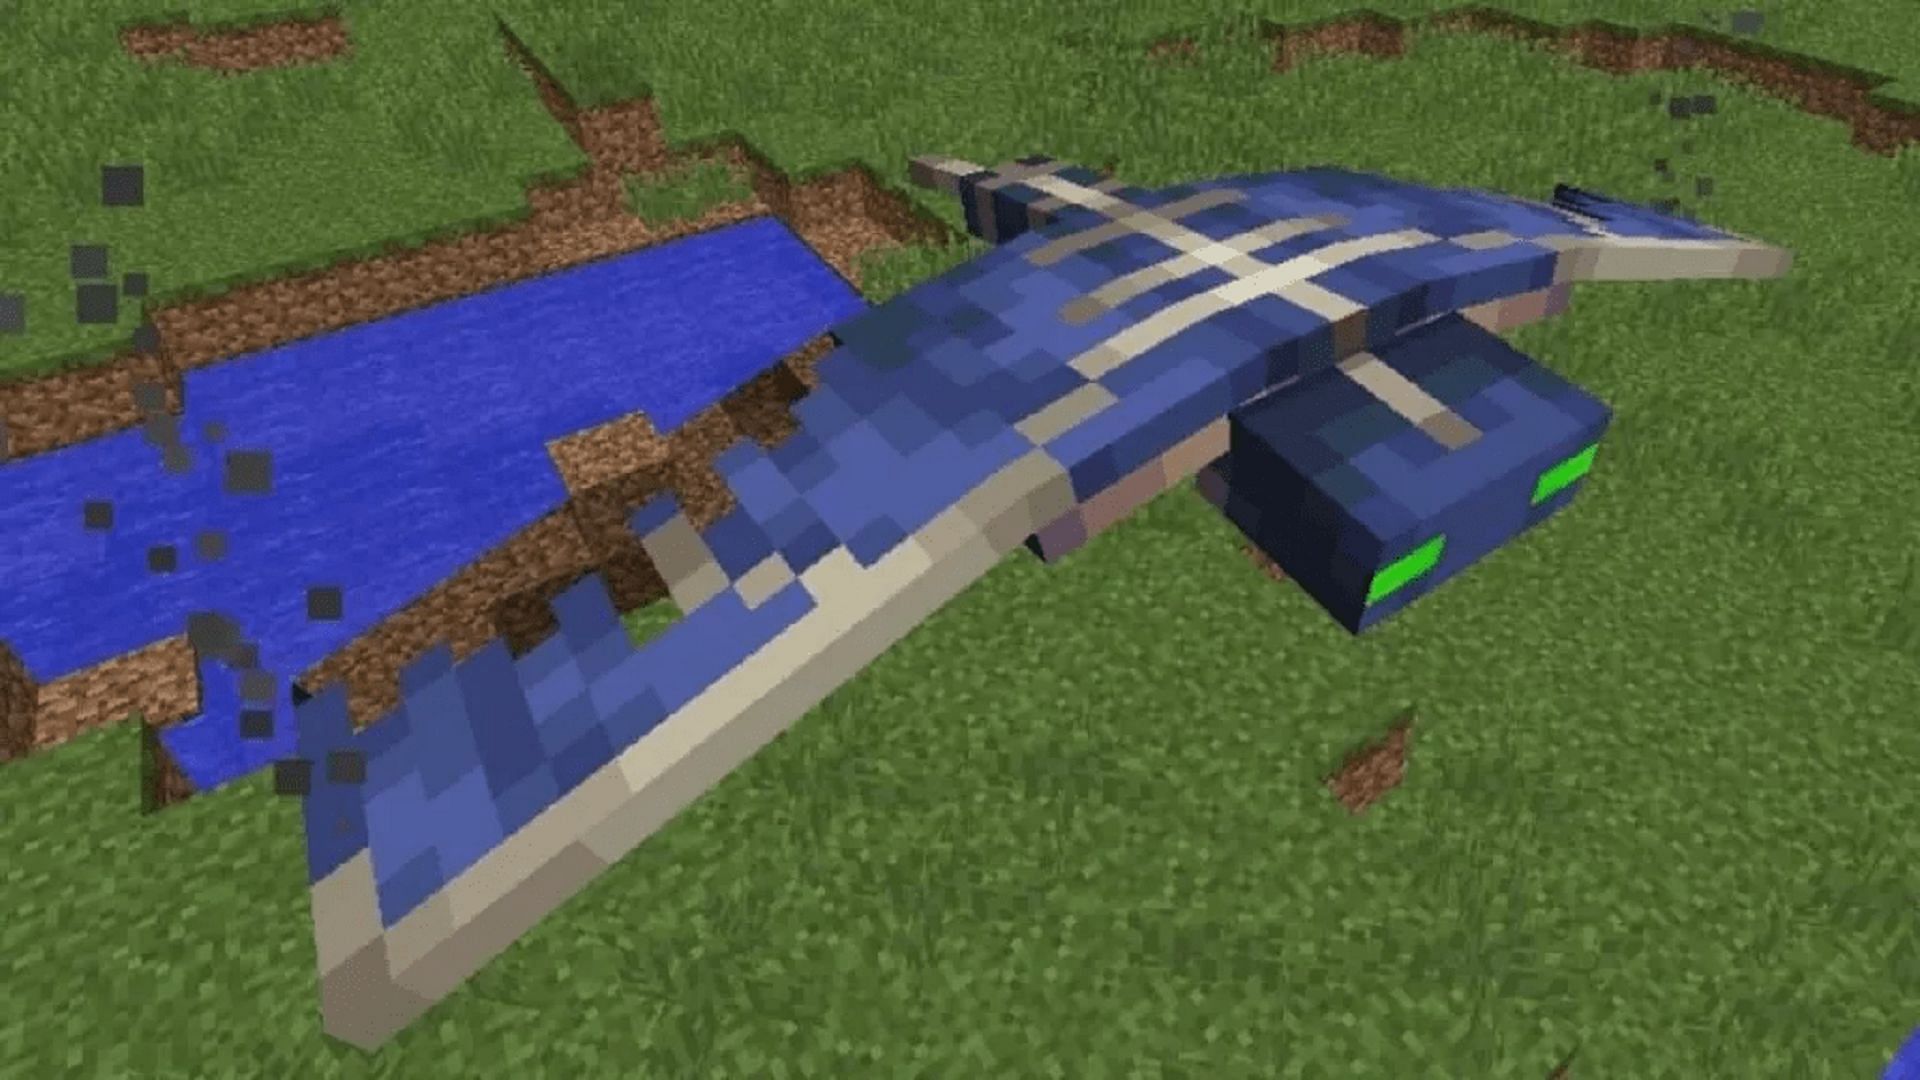 A Phantom takes flight in Minecraft (Image via Mojang)